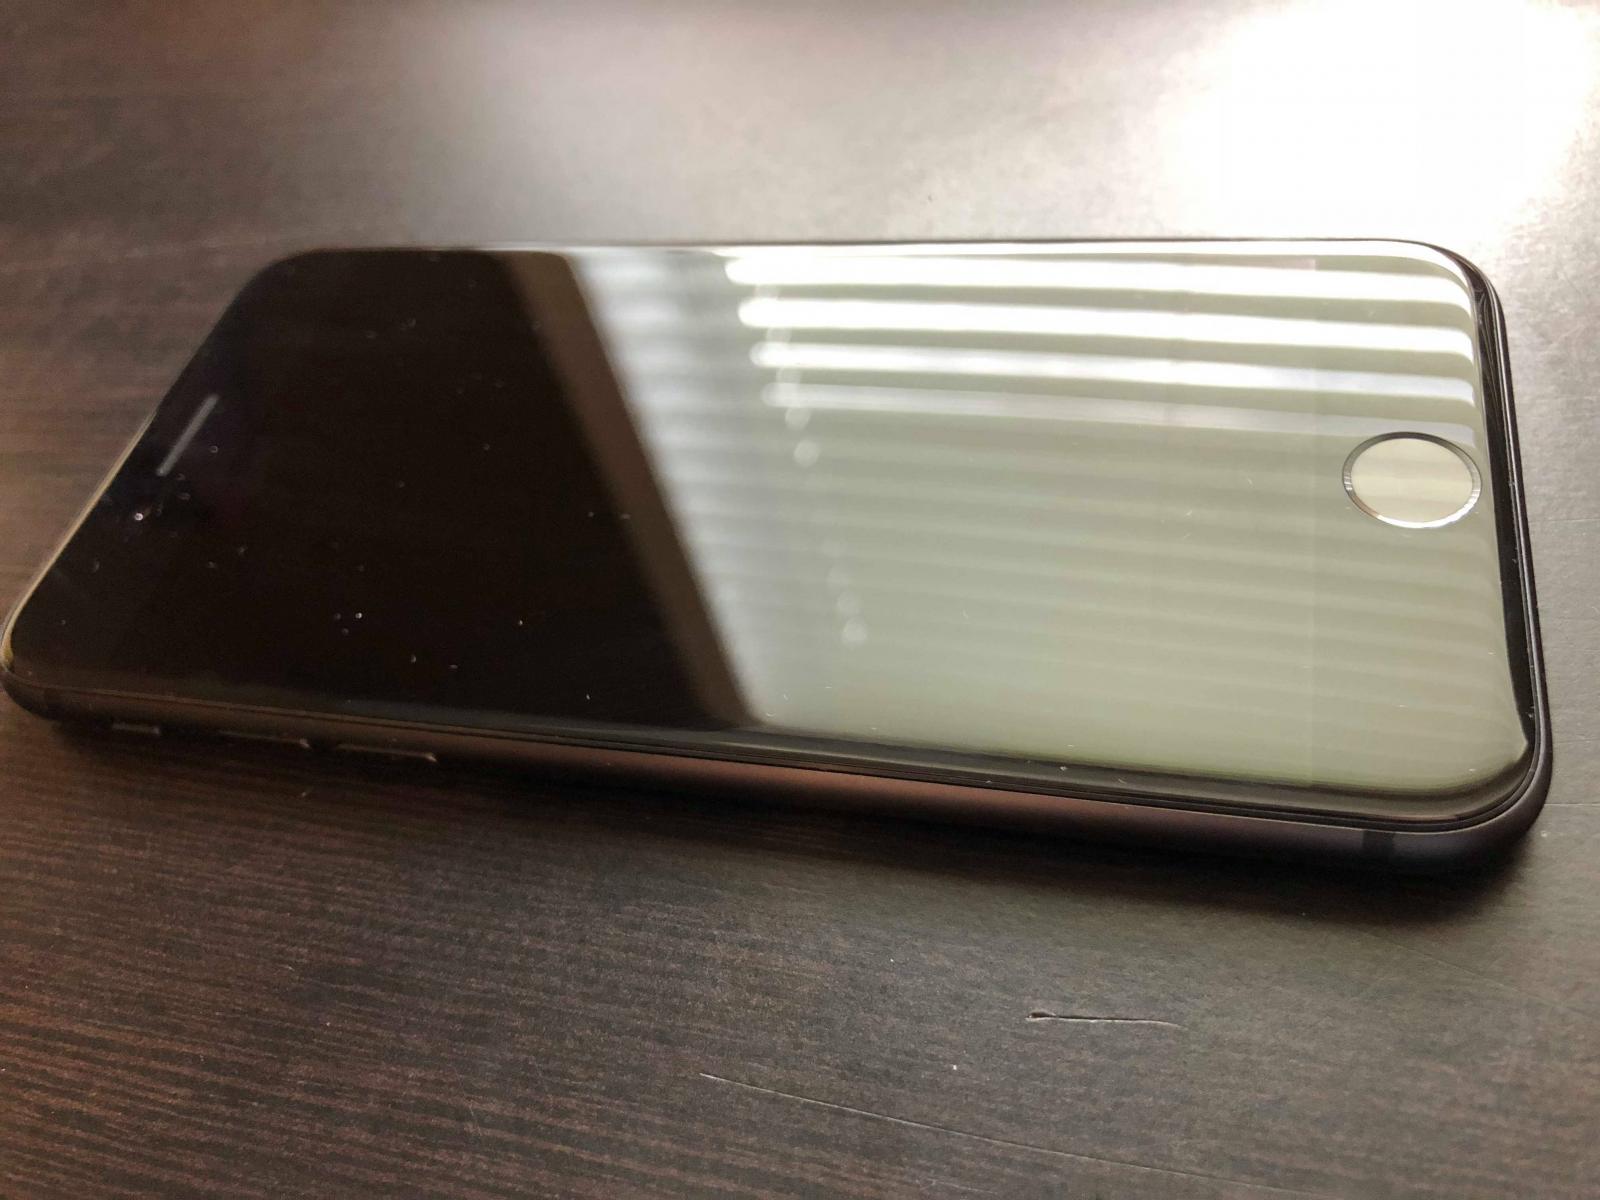 For sale FS: iPhone 8 Space Gray 256GB Verizon (Unlocked) Warranty